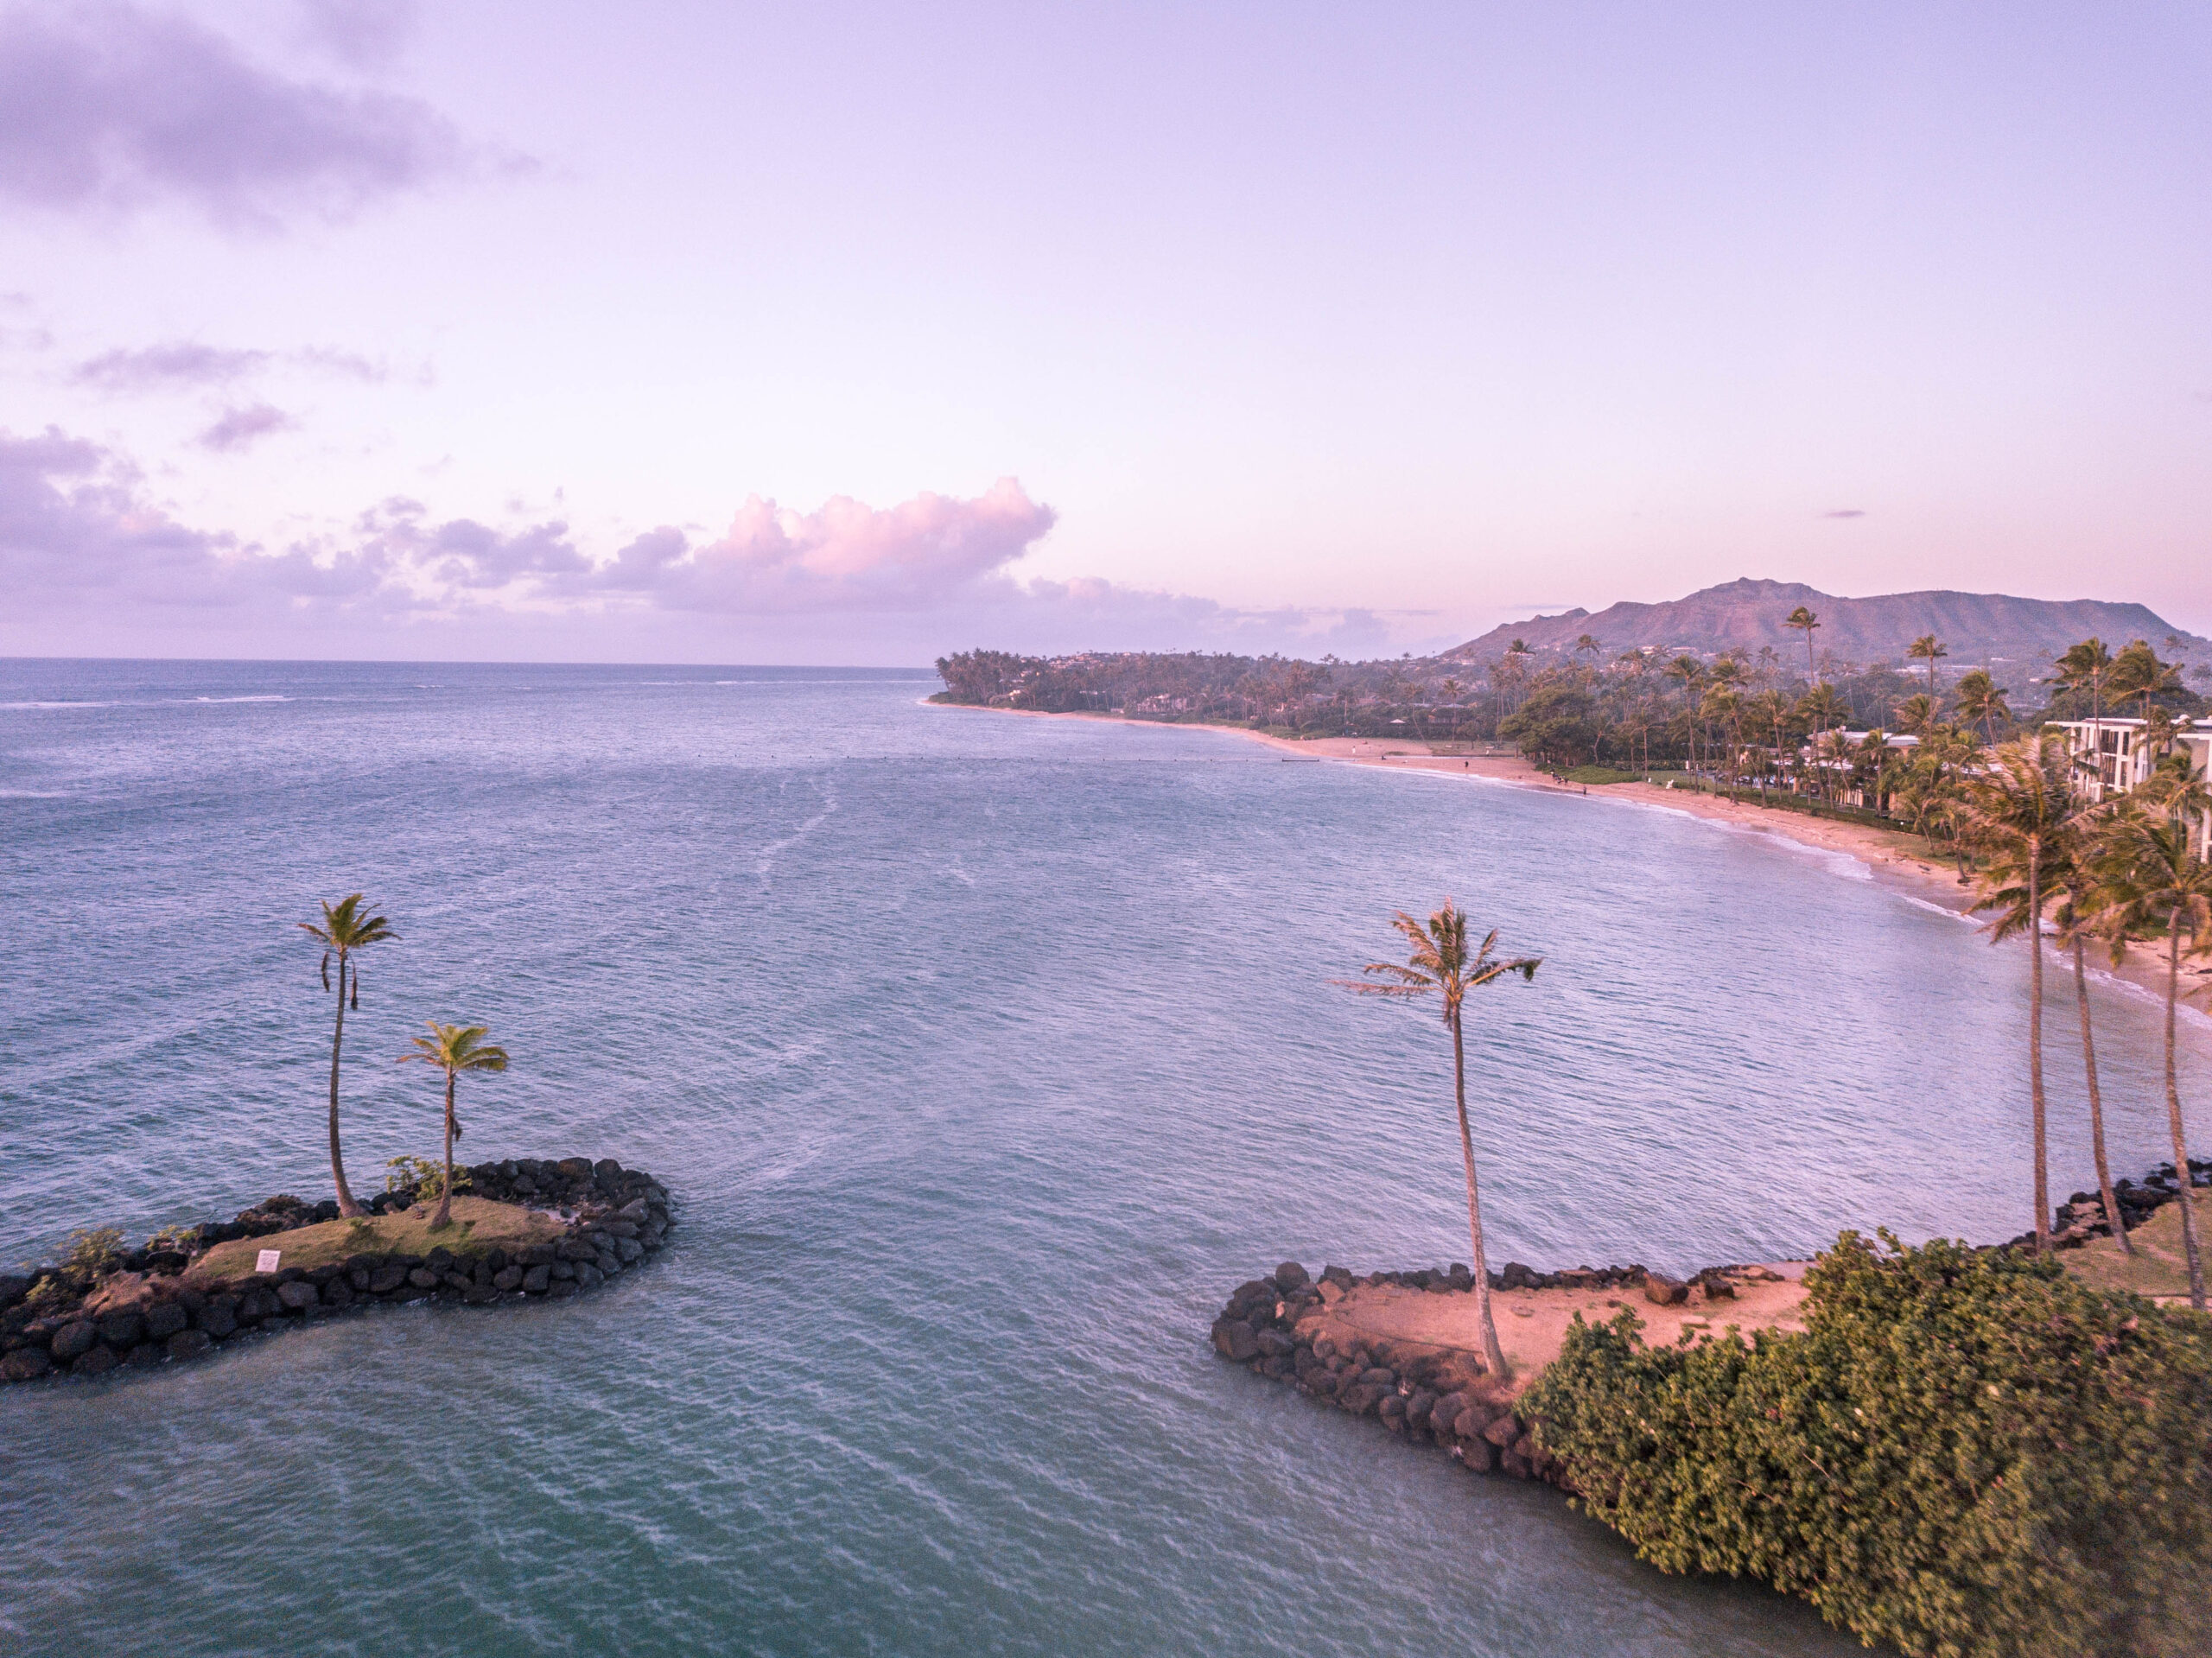 Hawaii Photos: The Kahala - In need of a tropical escape? Sharing a photo diary of the Kahala Resort and surrounding beaches on Oahu, Hawaii! | Kahala Hotel - Kahala Resort - Kahala Hawaii - Waialae-Kahala